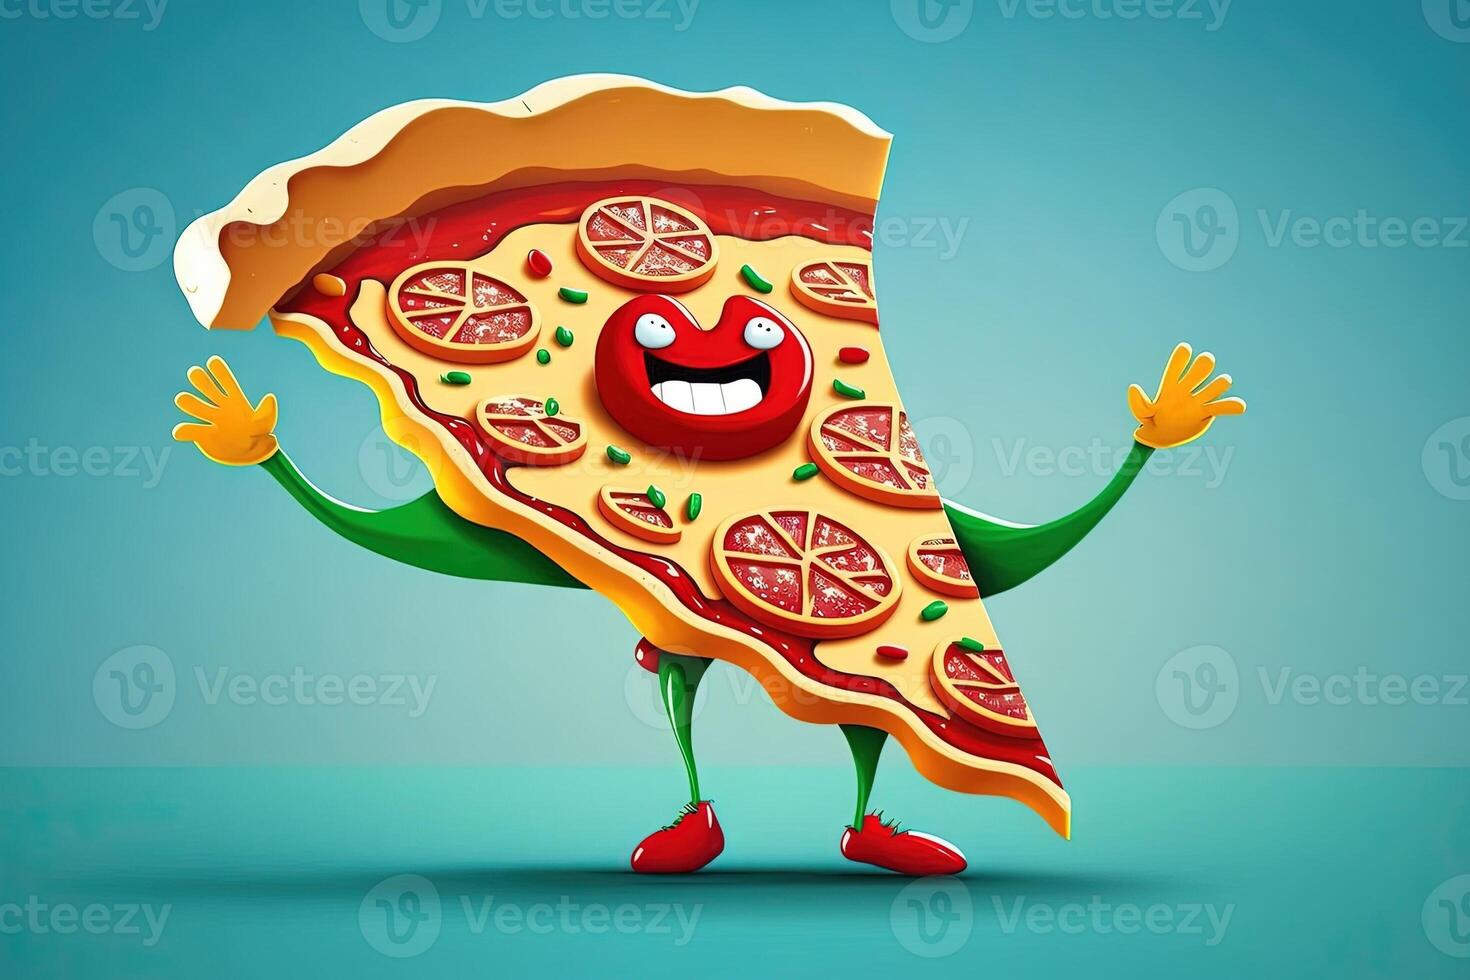 Superhero slice of pizza illustration photo